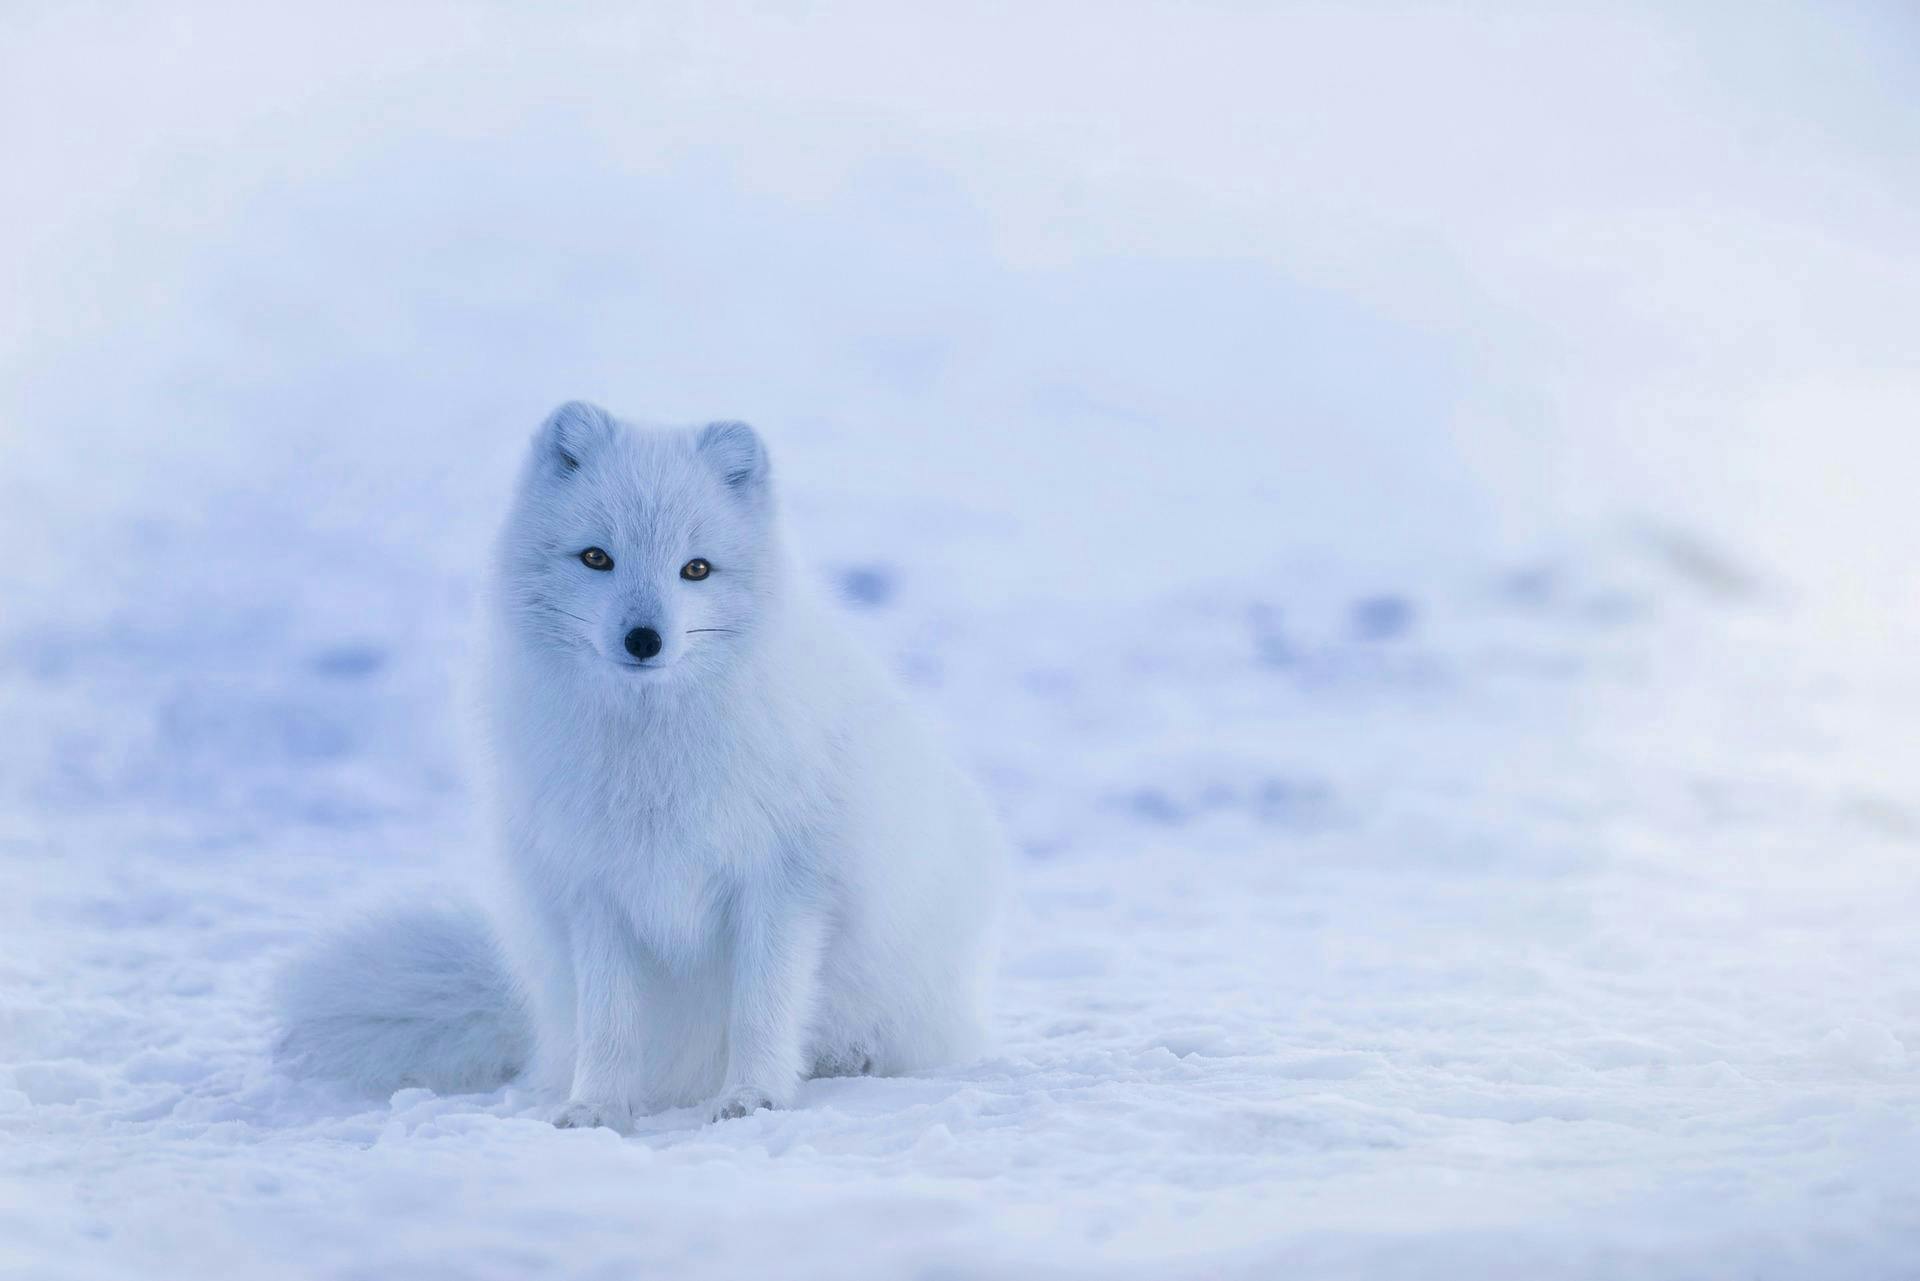 An arctic fox blending into the snow